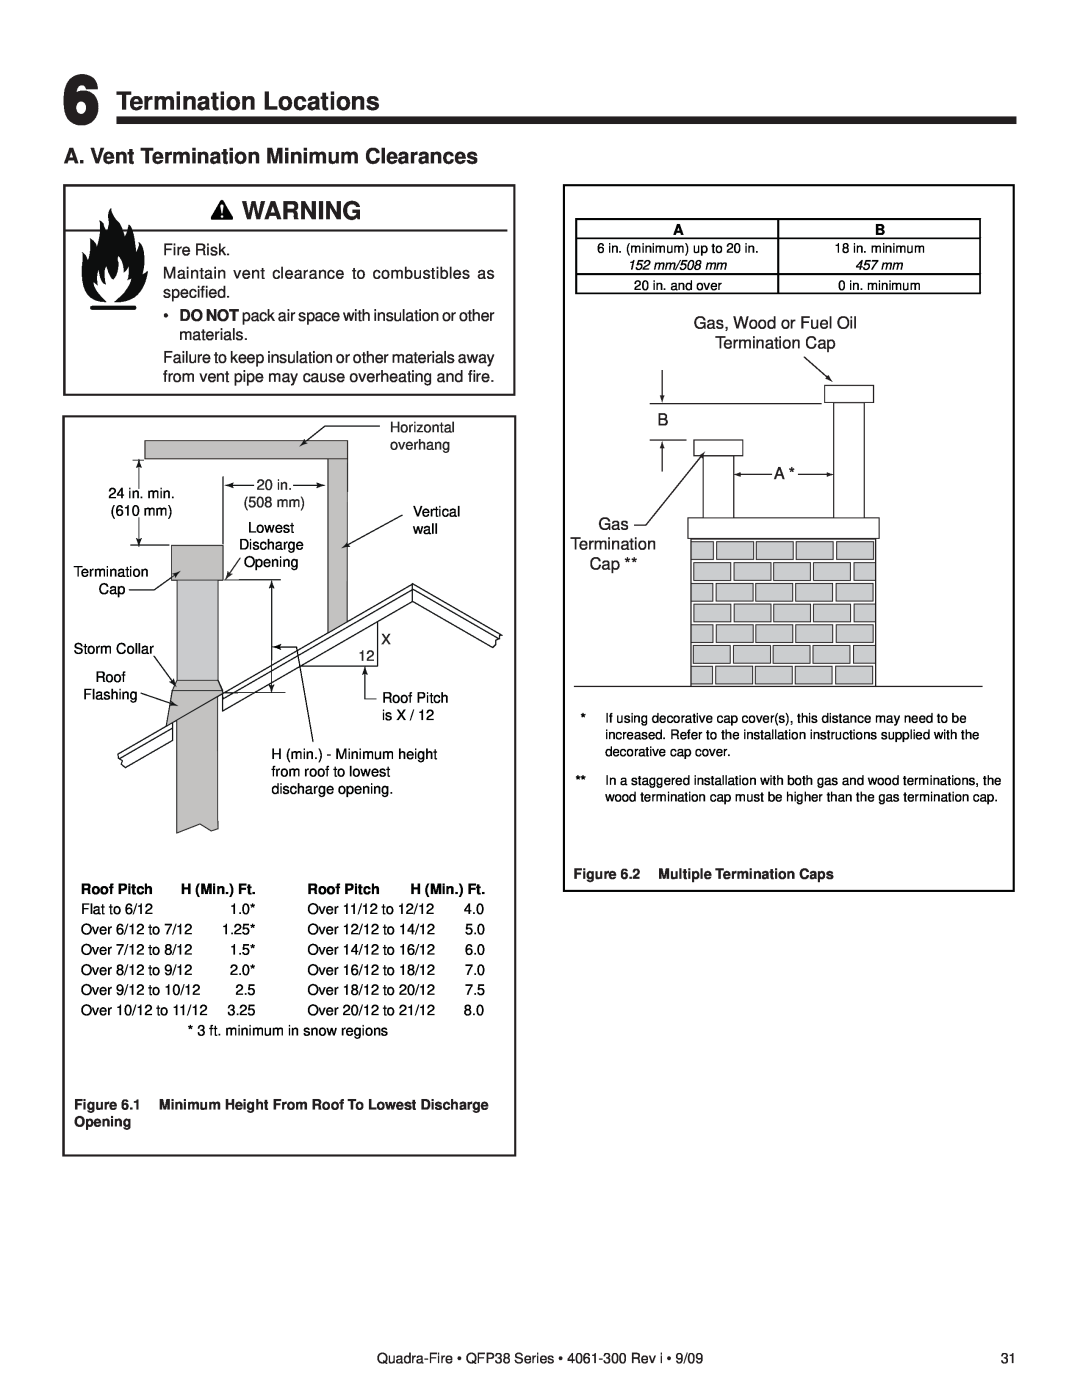 Quadra-Fire QFP38-LP Termination Locations, A. Vent Termination Minimum Clearances, Horizontal, overhang, 20 in, 508 mm 